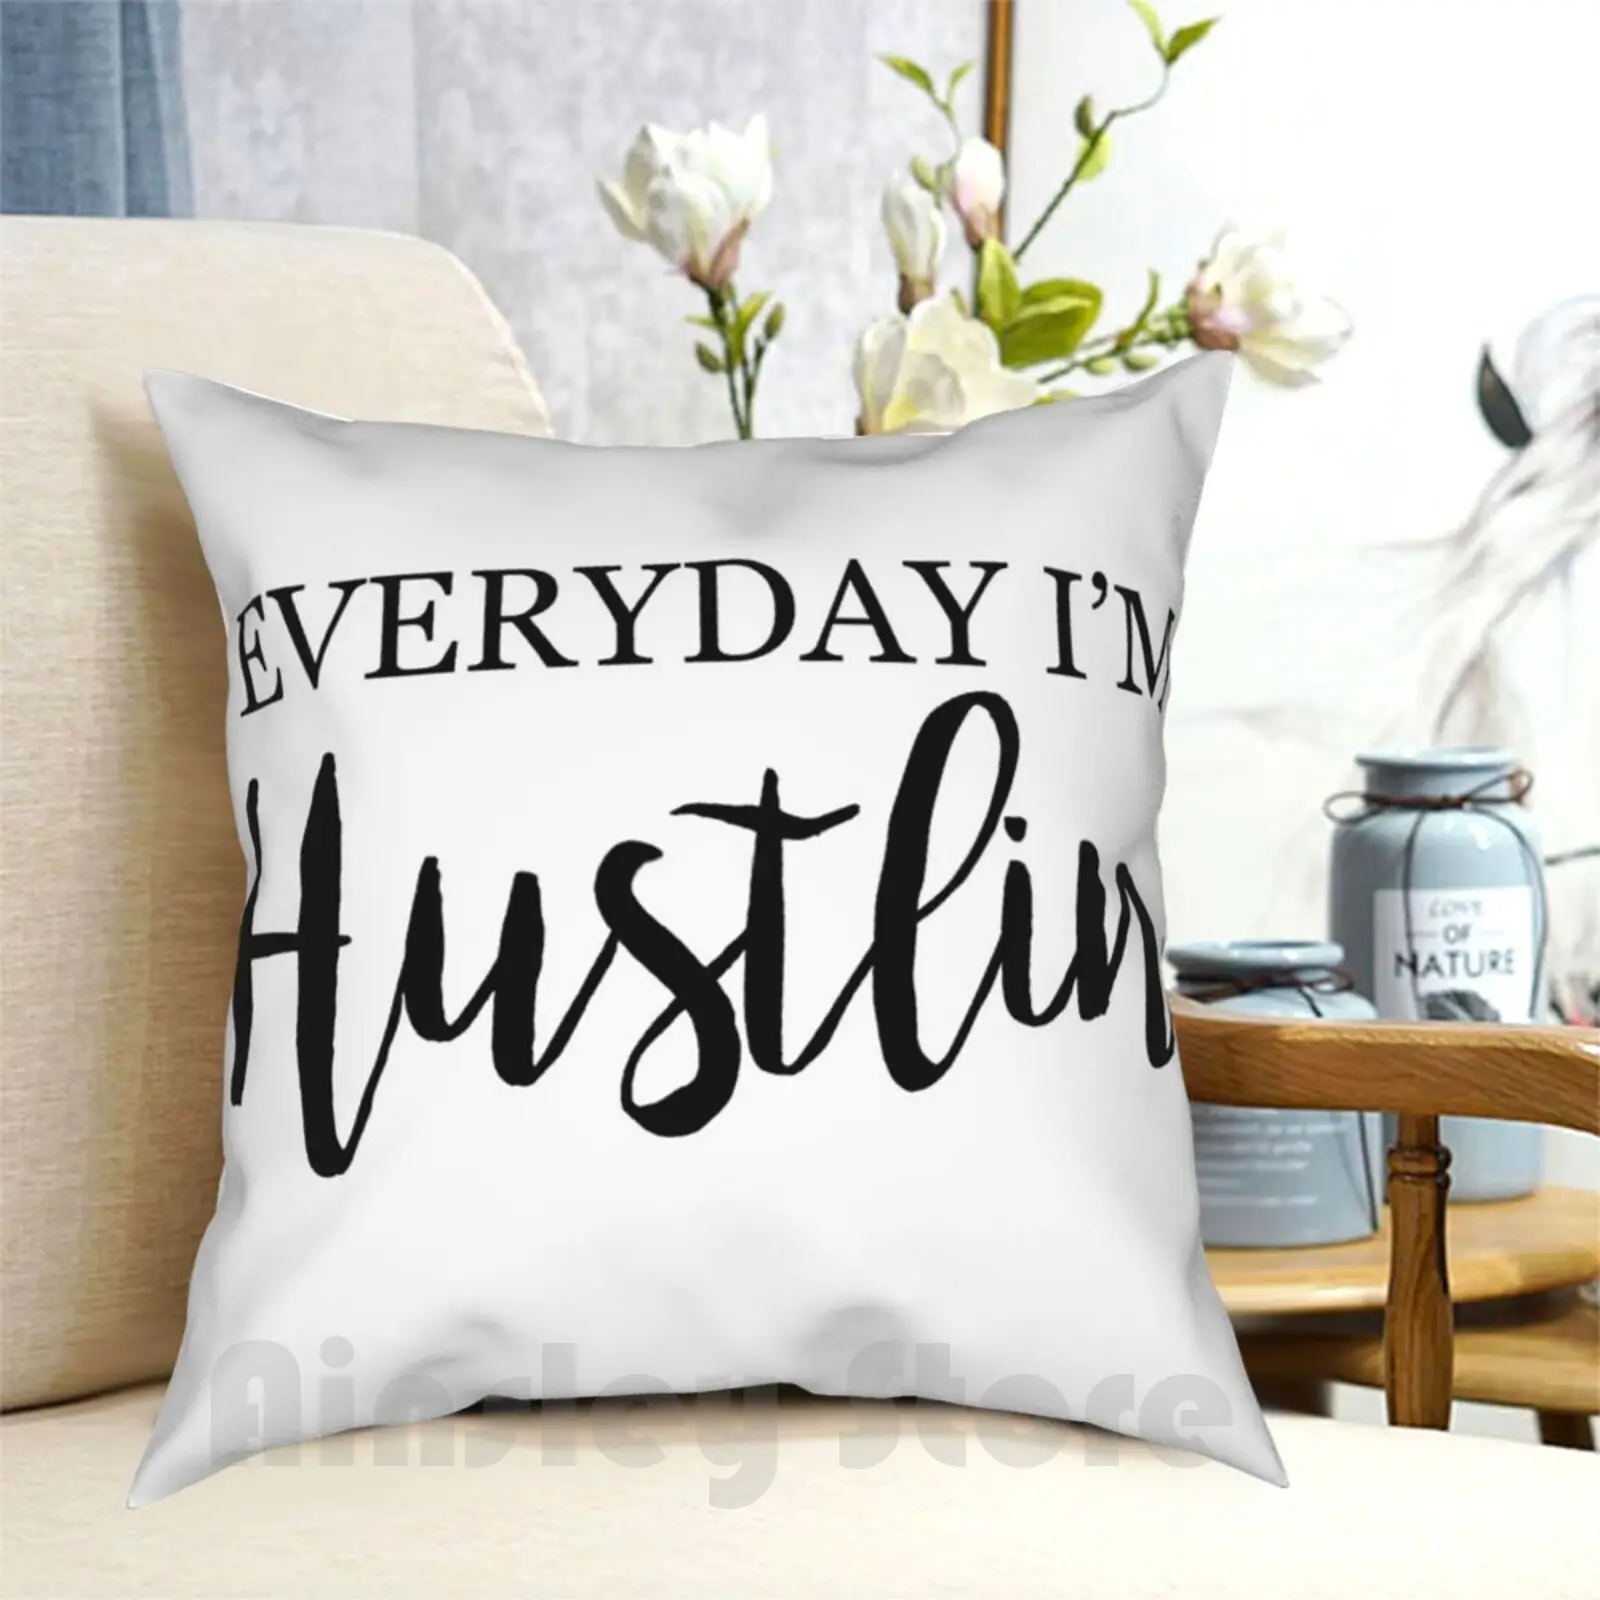 

Everyday I'M Hustlin Pillow Case Printed Home Soft DIY Pillow cover Everyday Im Hustlin Hustle Work Hard Work Get Money